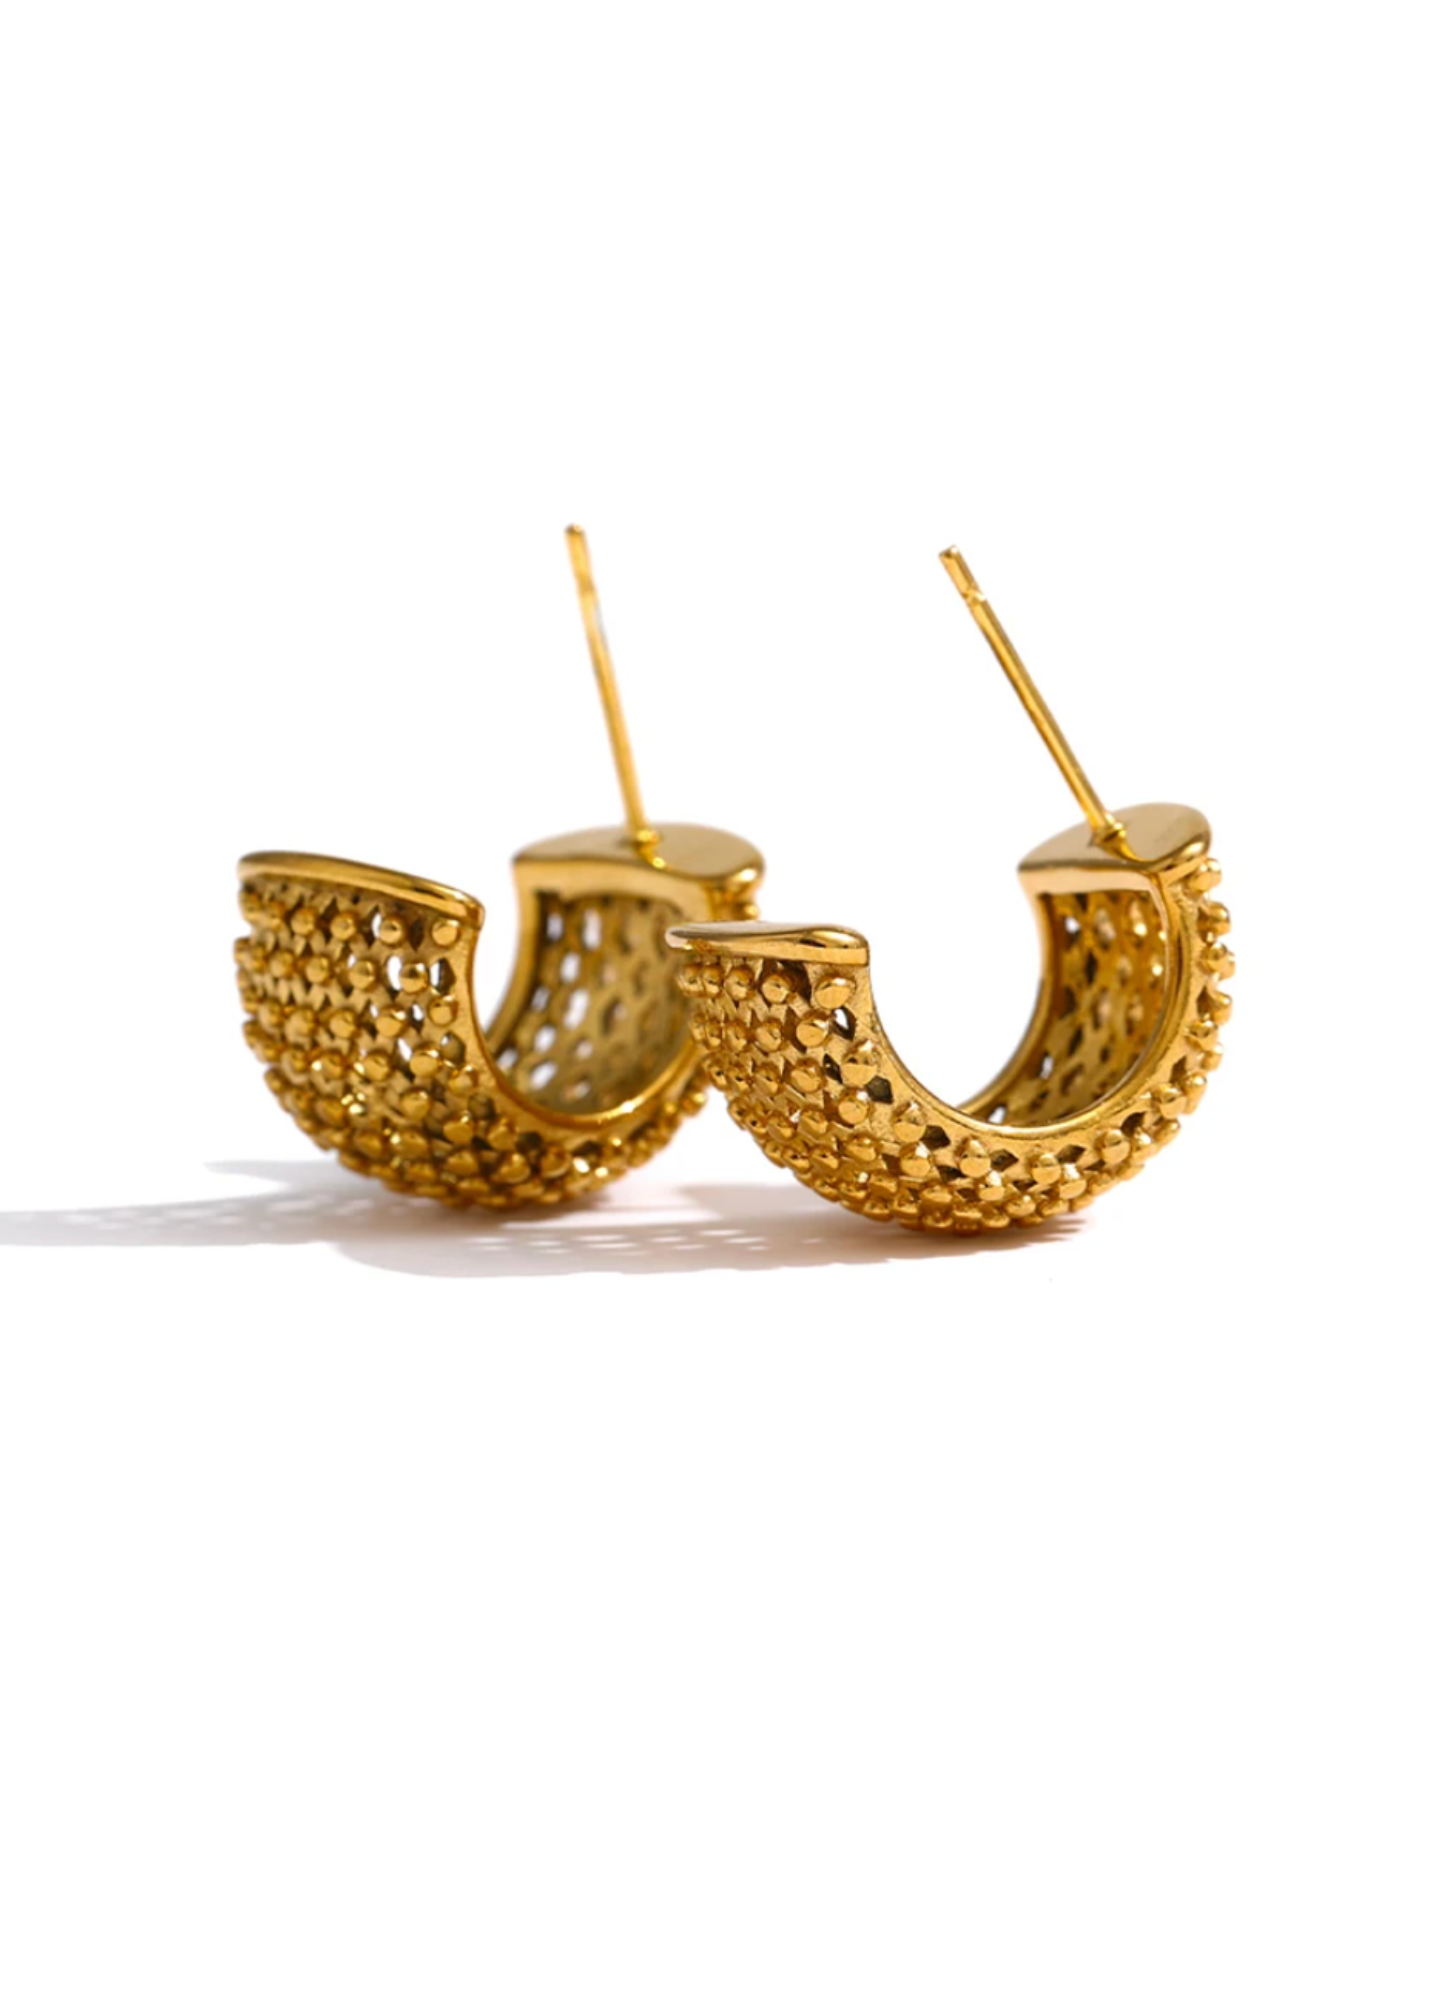 The Gold Chain Cuff Earring Momera Goondiwindi